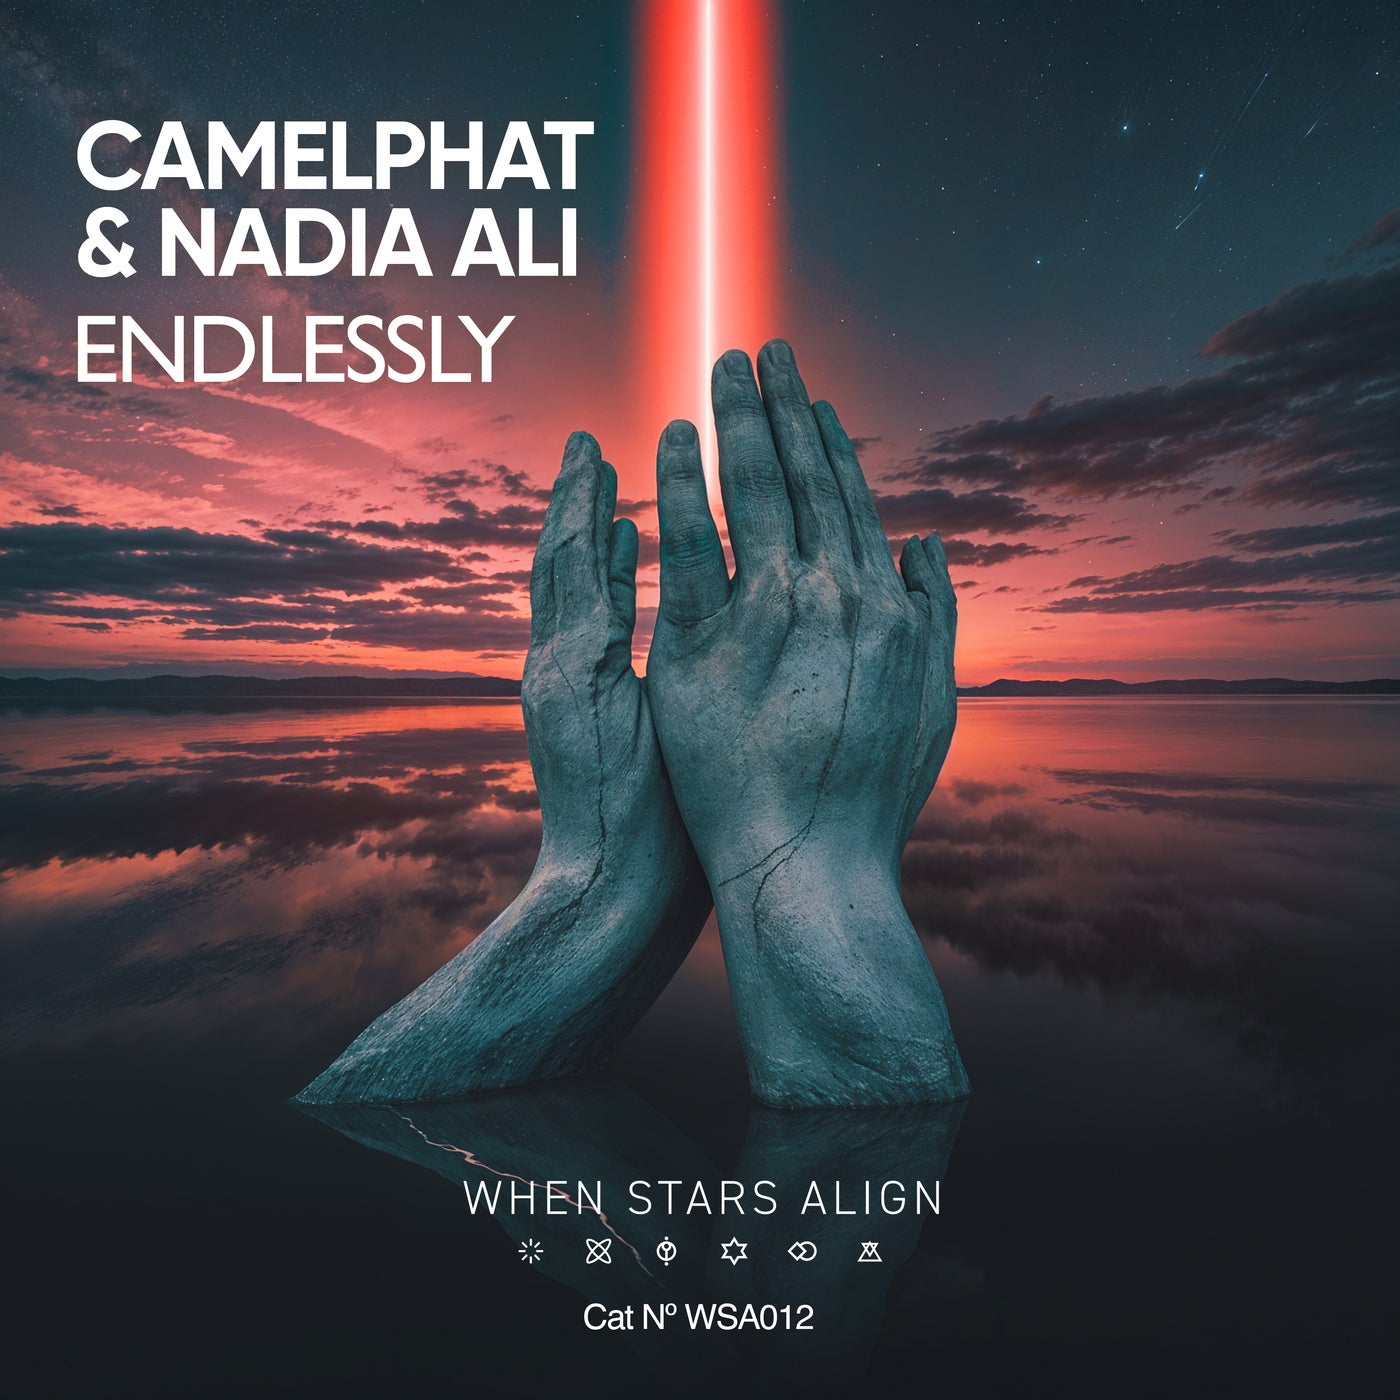 image cover: Nadia Ali, CamelPhat - Endlessly on When Stars Align